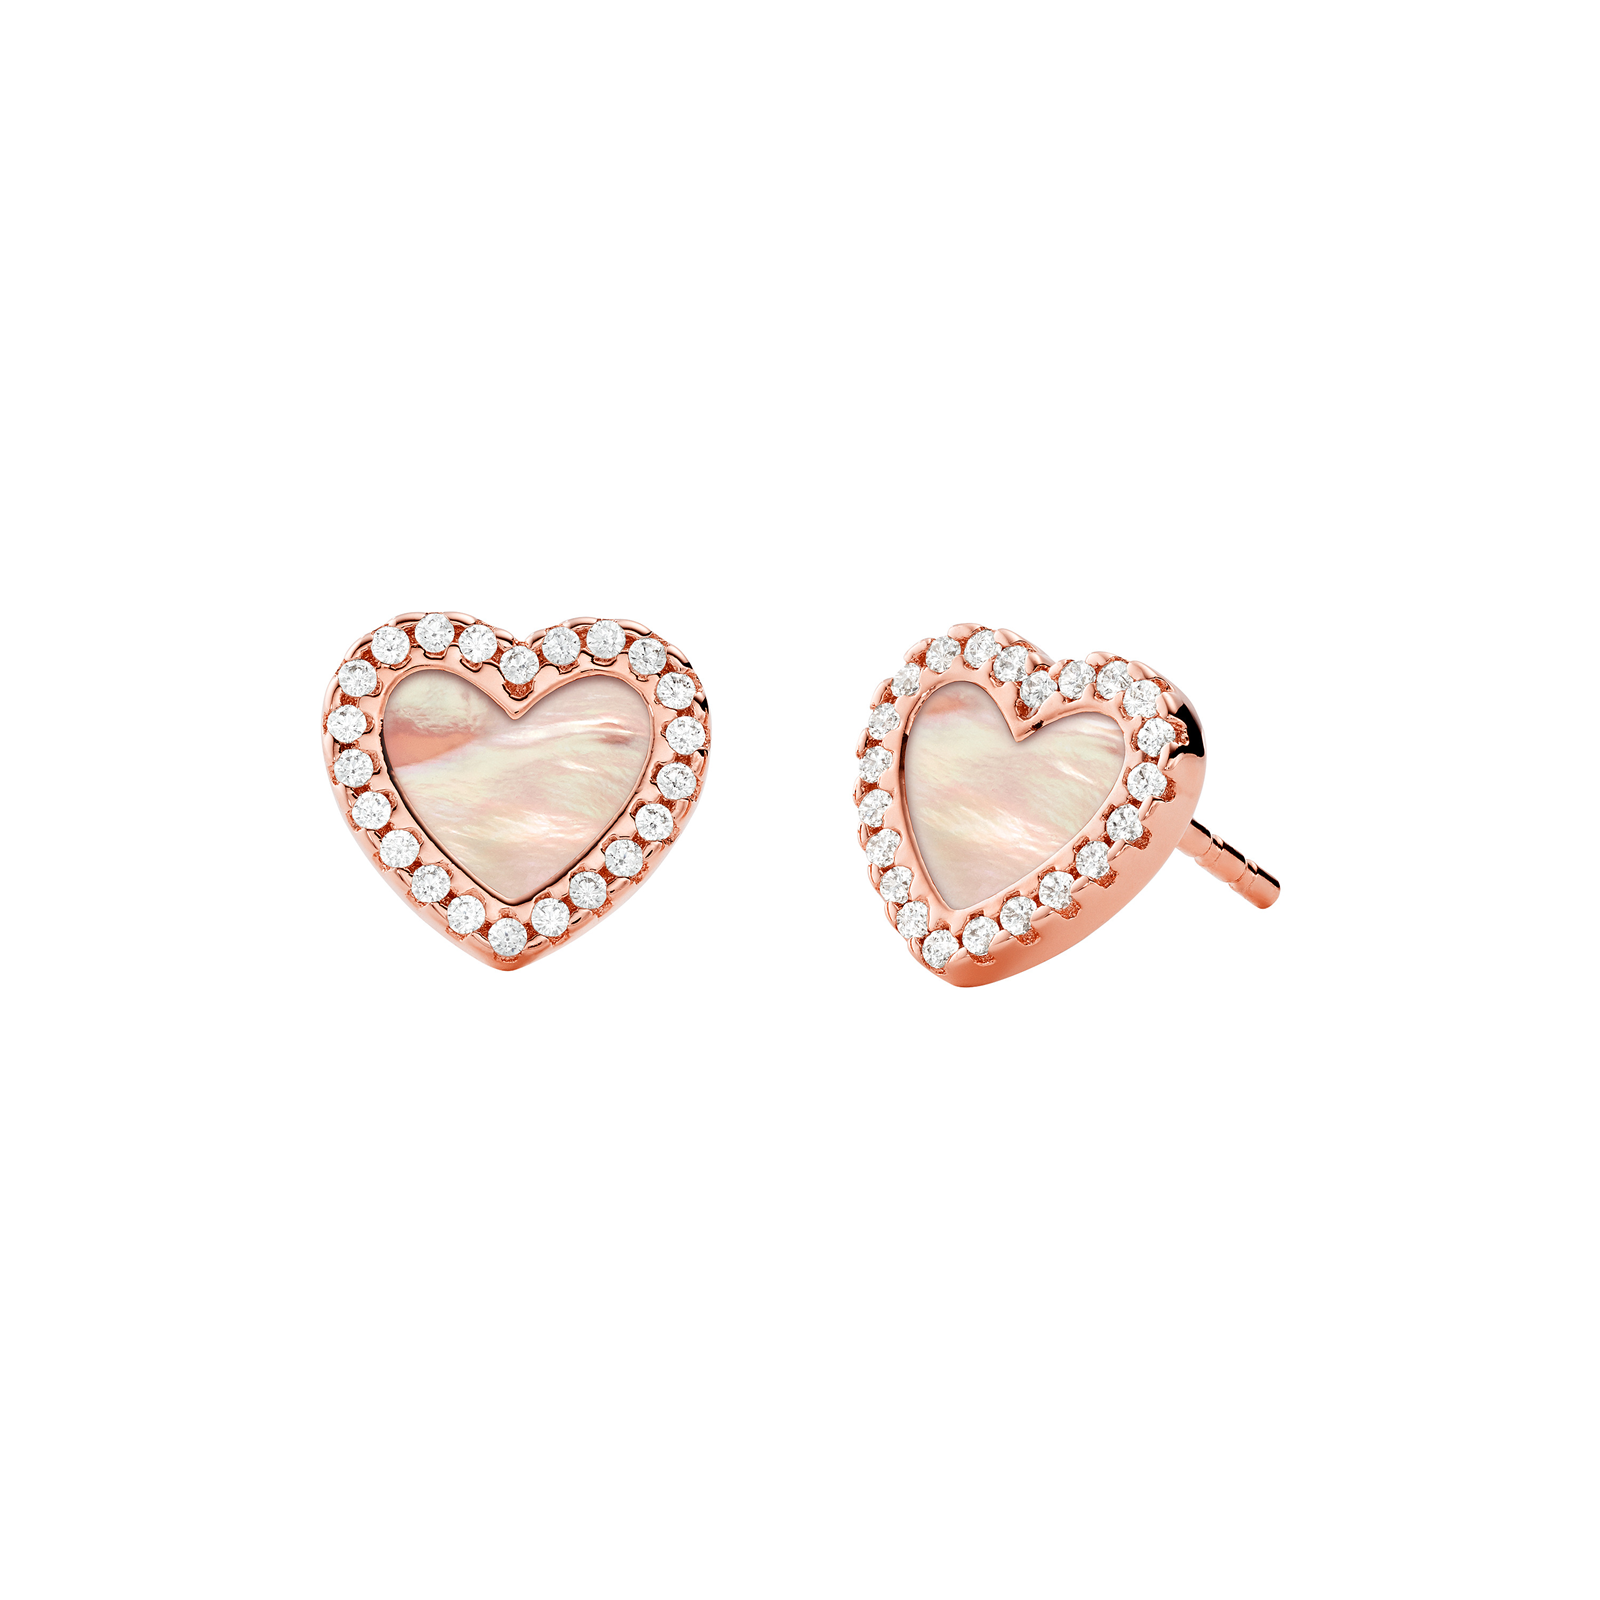 michael kors love heart earrings